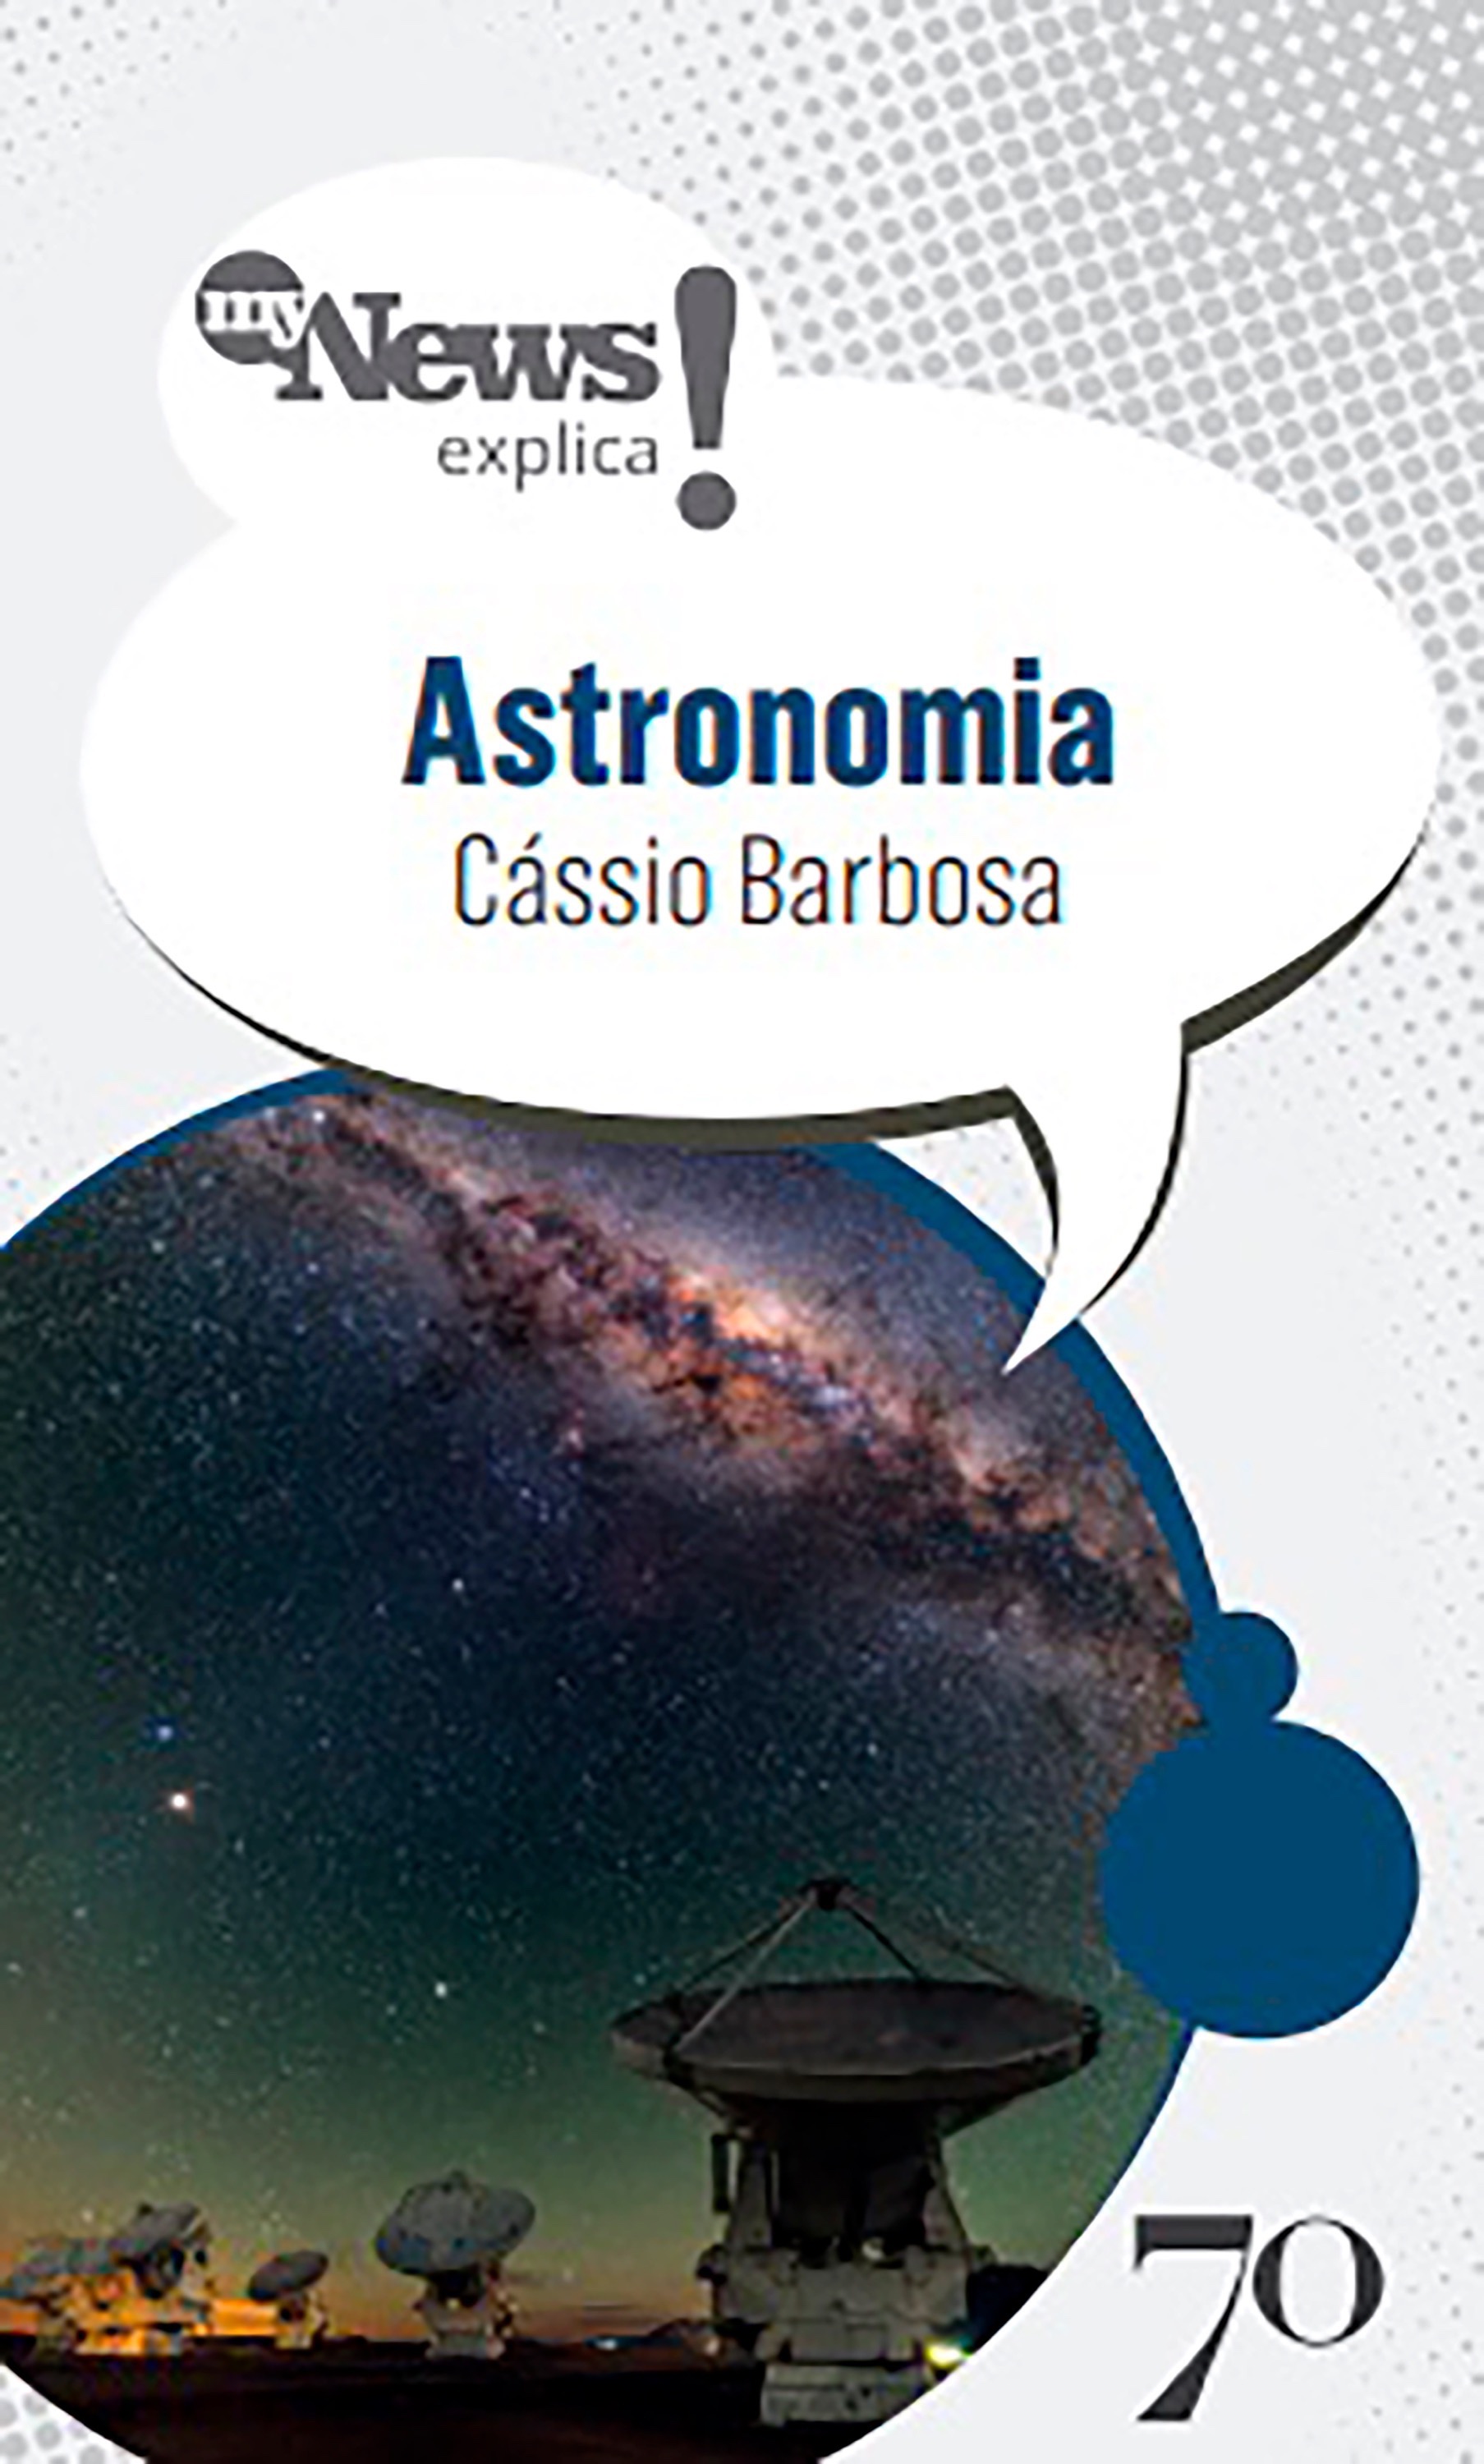 MyNews Explica Astronomia